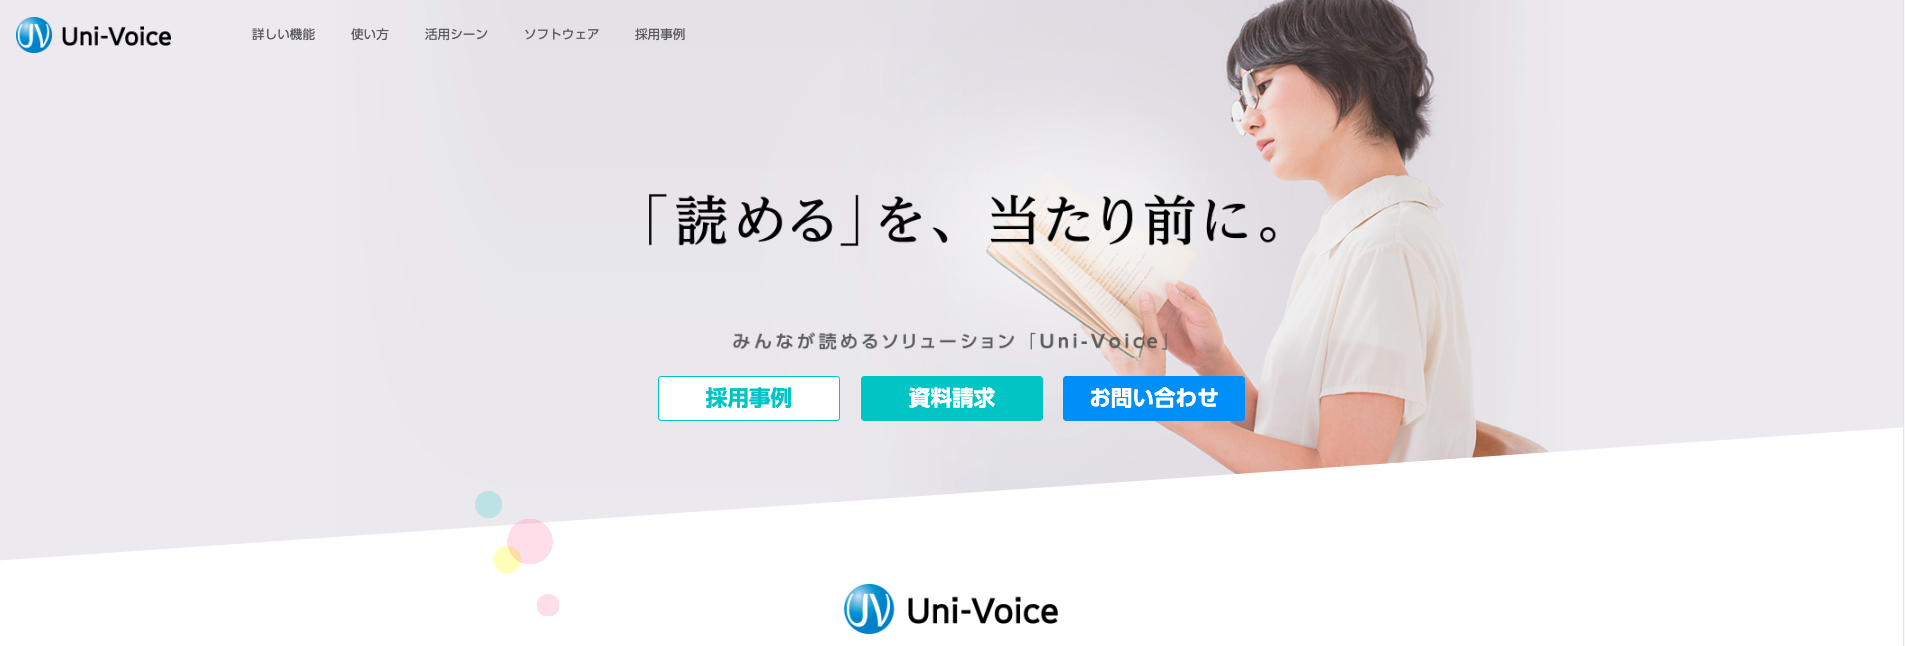 Uni-Voice